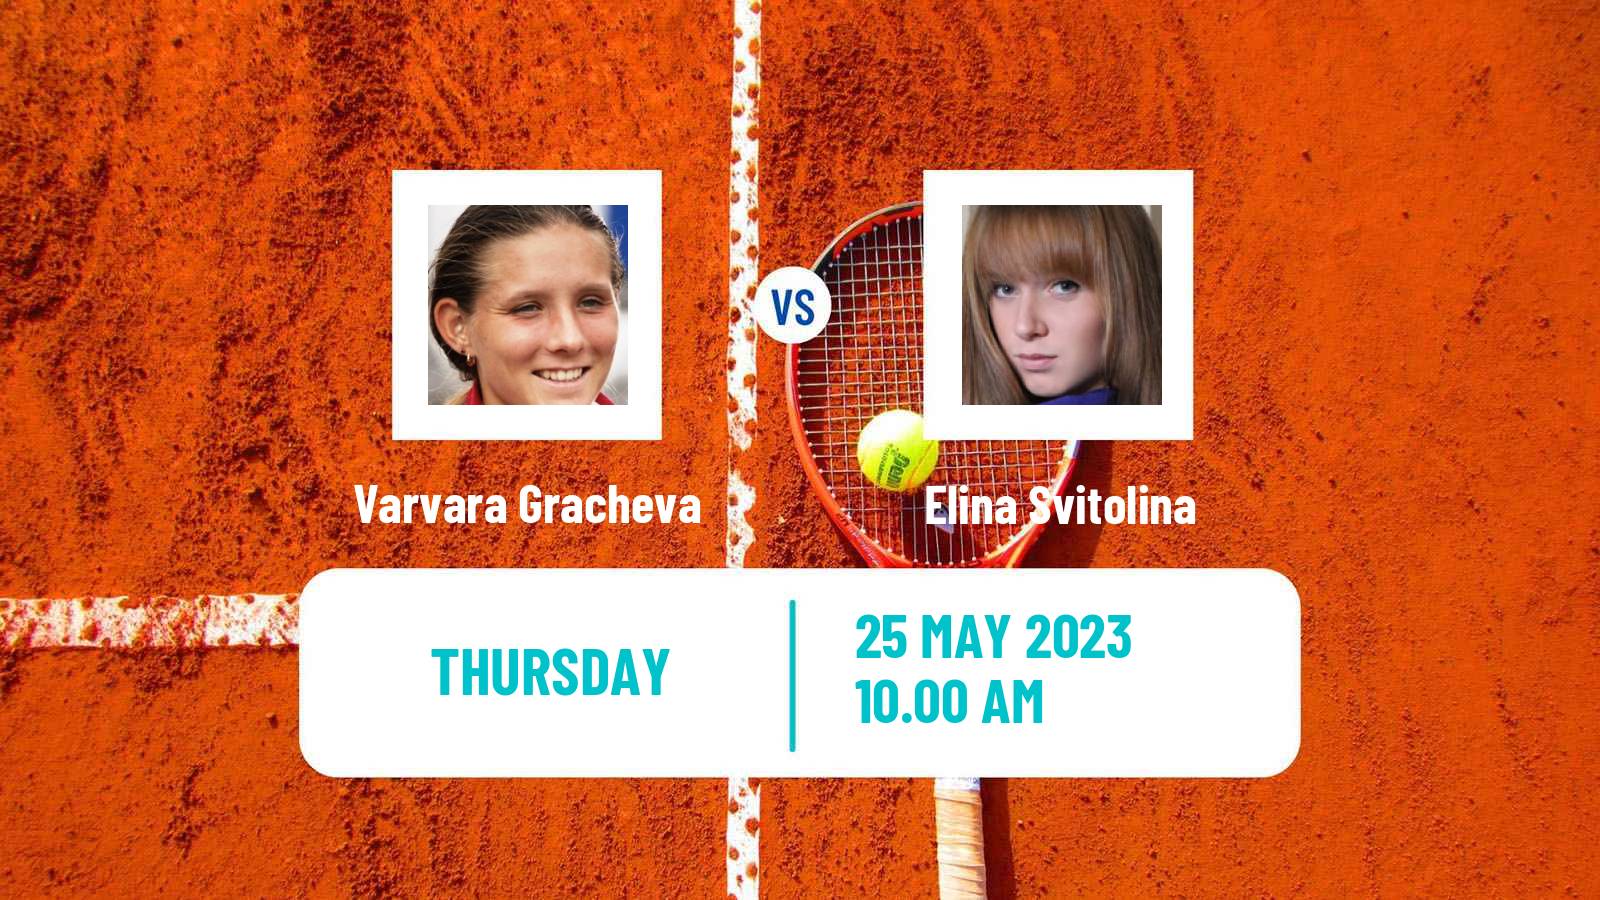 Tennis WTA Strasbourg Varvara Gracheva - Elina Svitolina